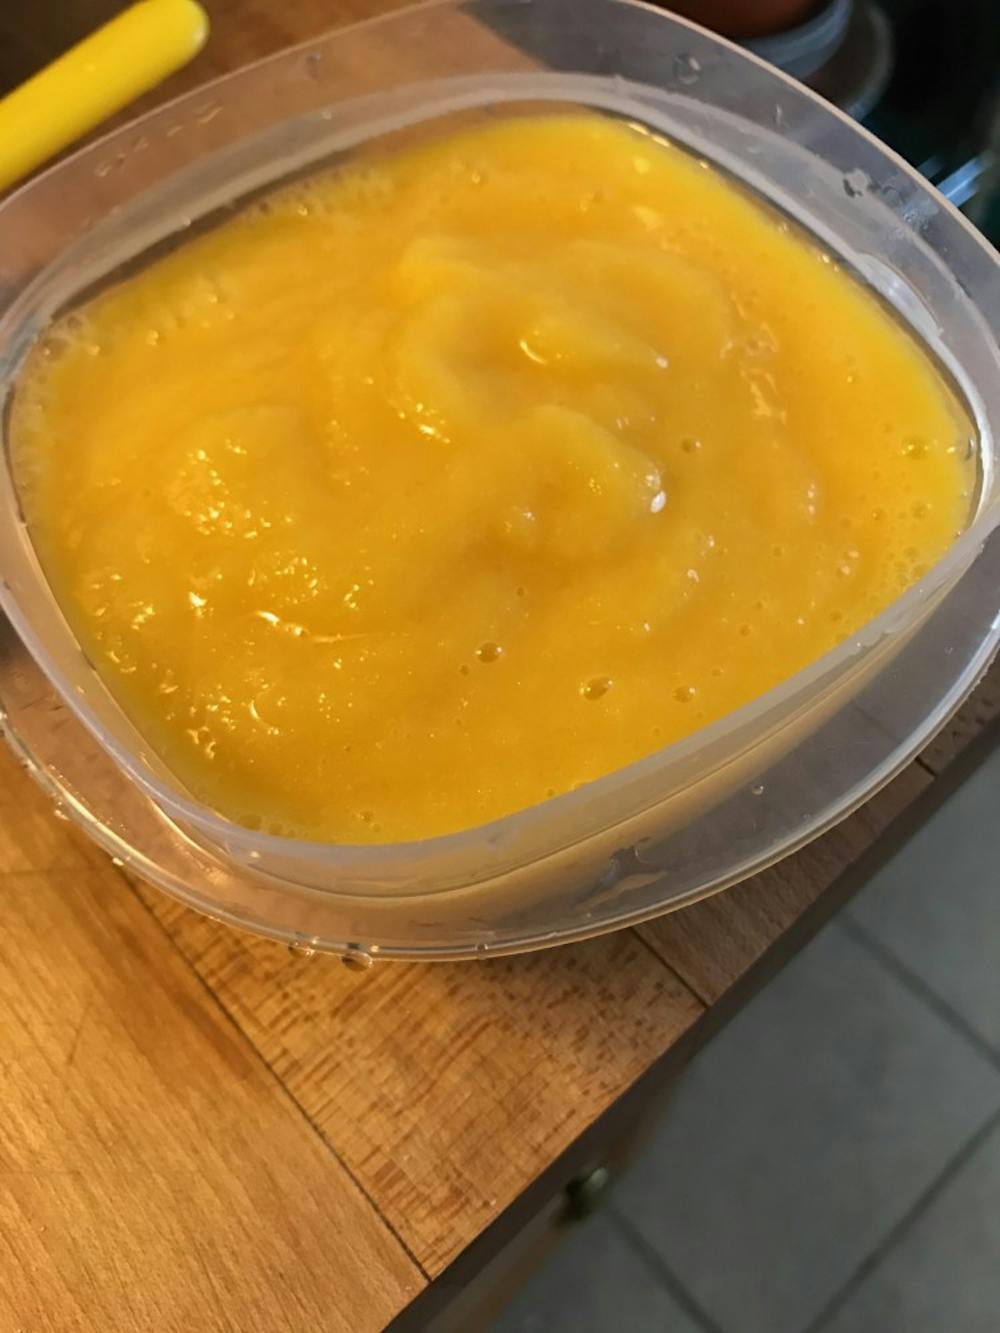 Recipe of the week: Homemade mango sorbet